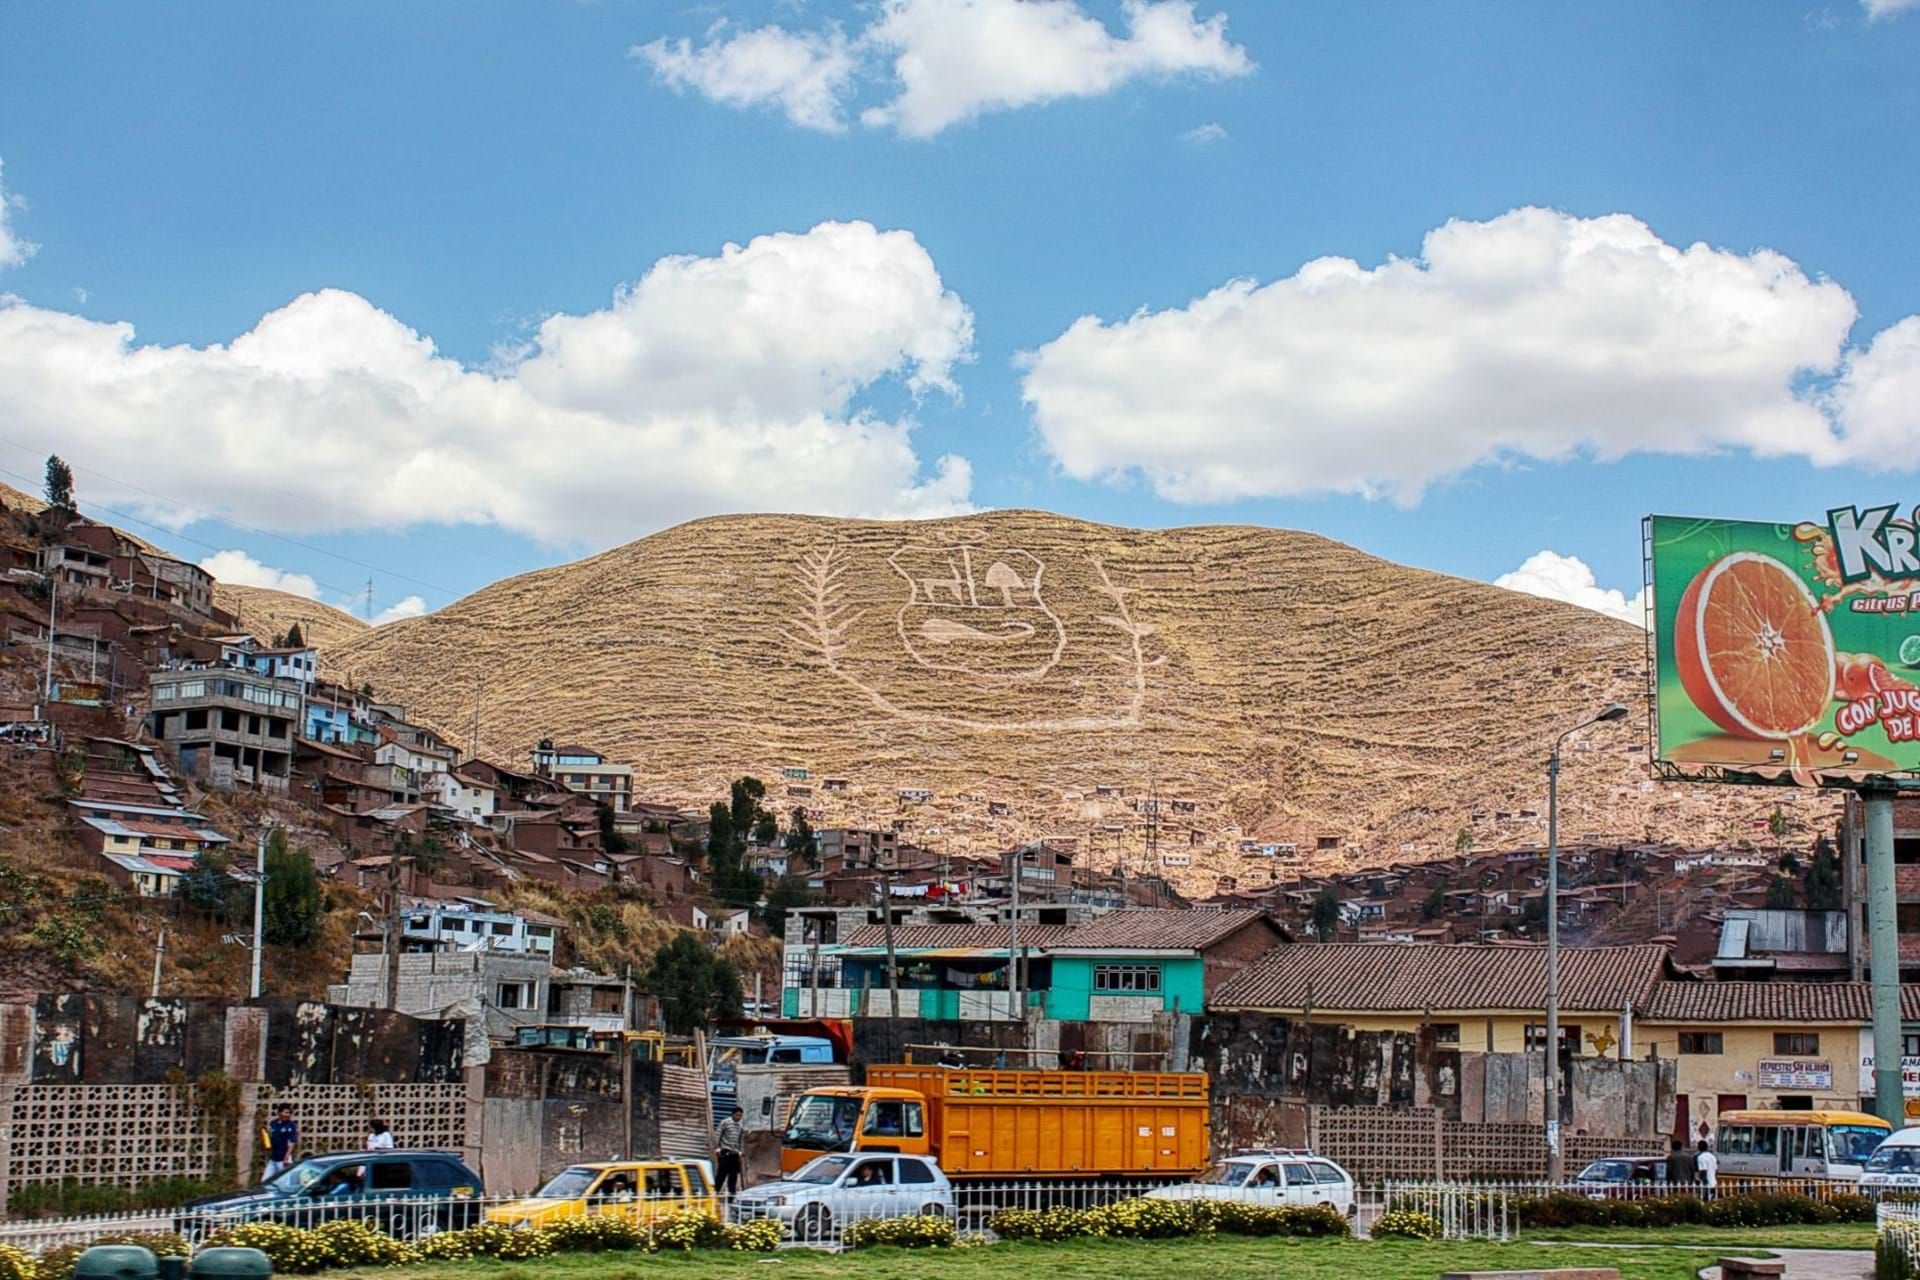 How did you find Peru as a trekking destination?